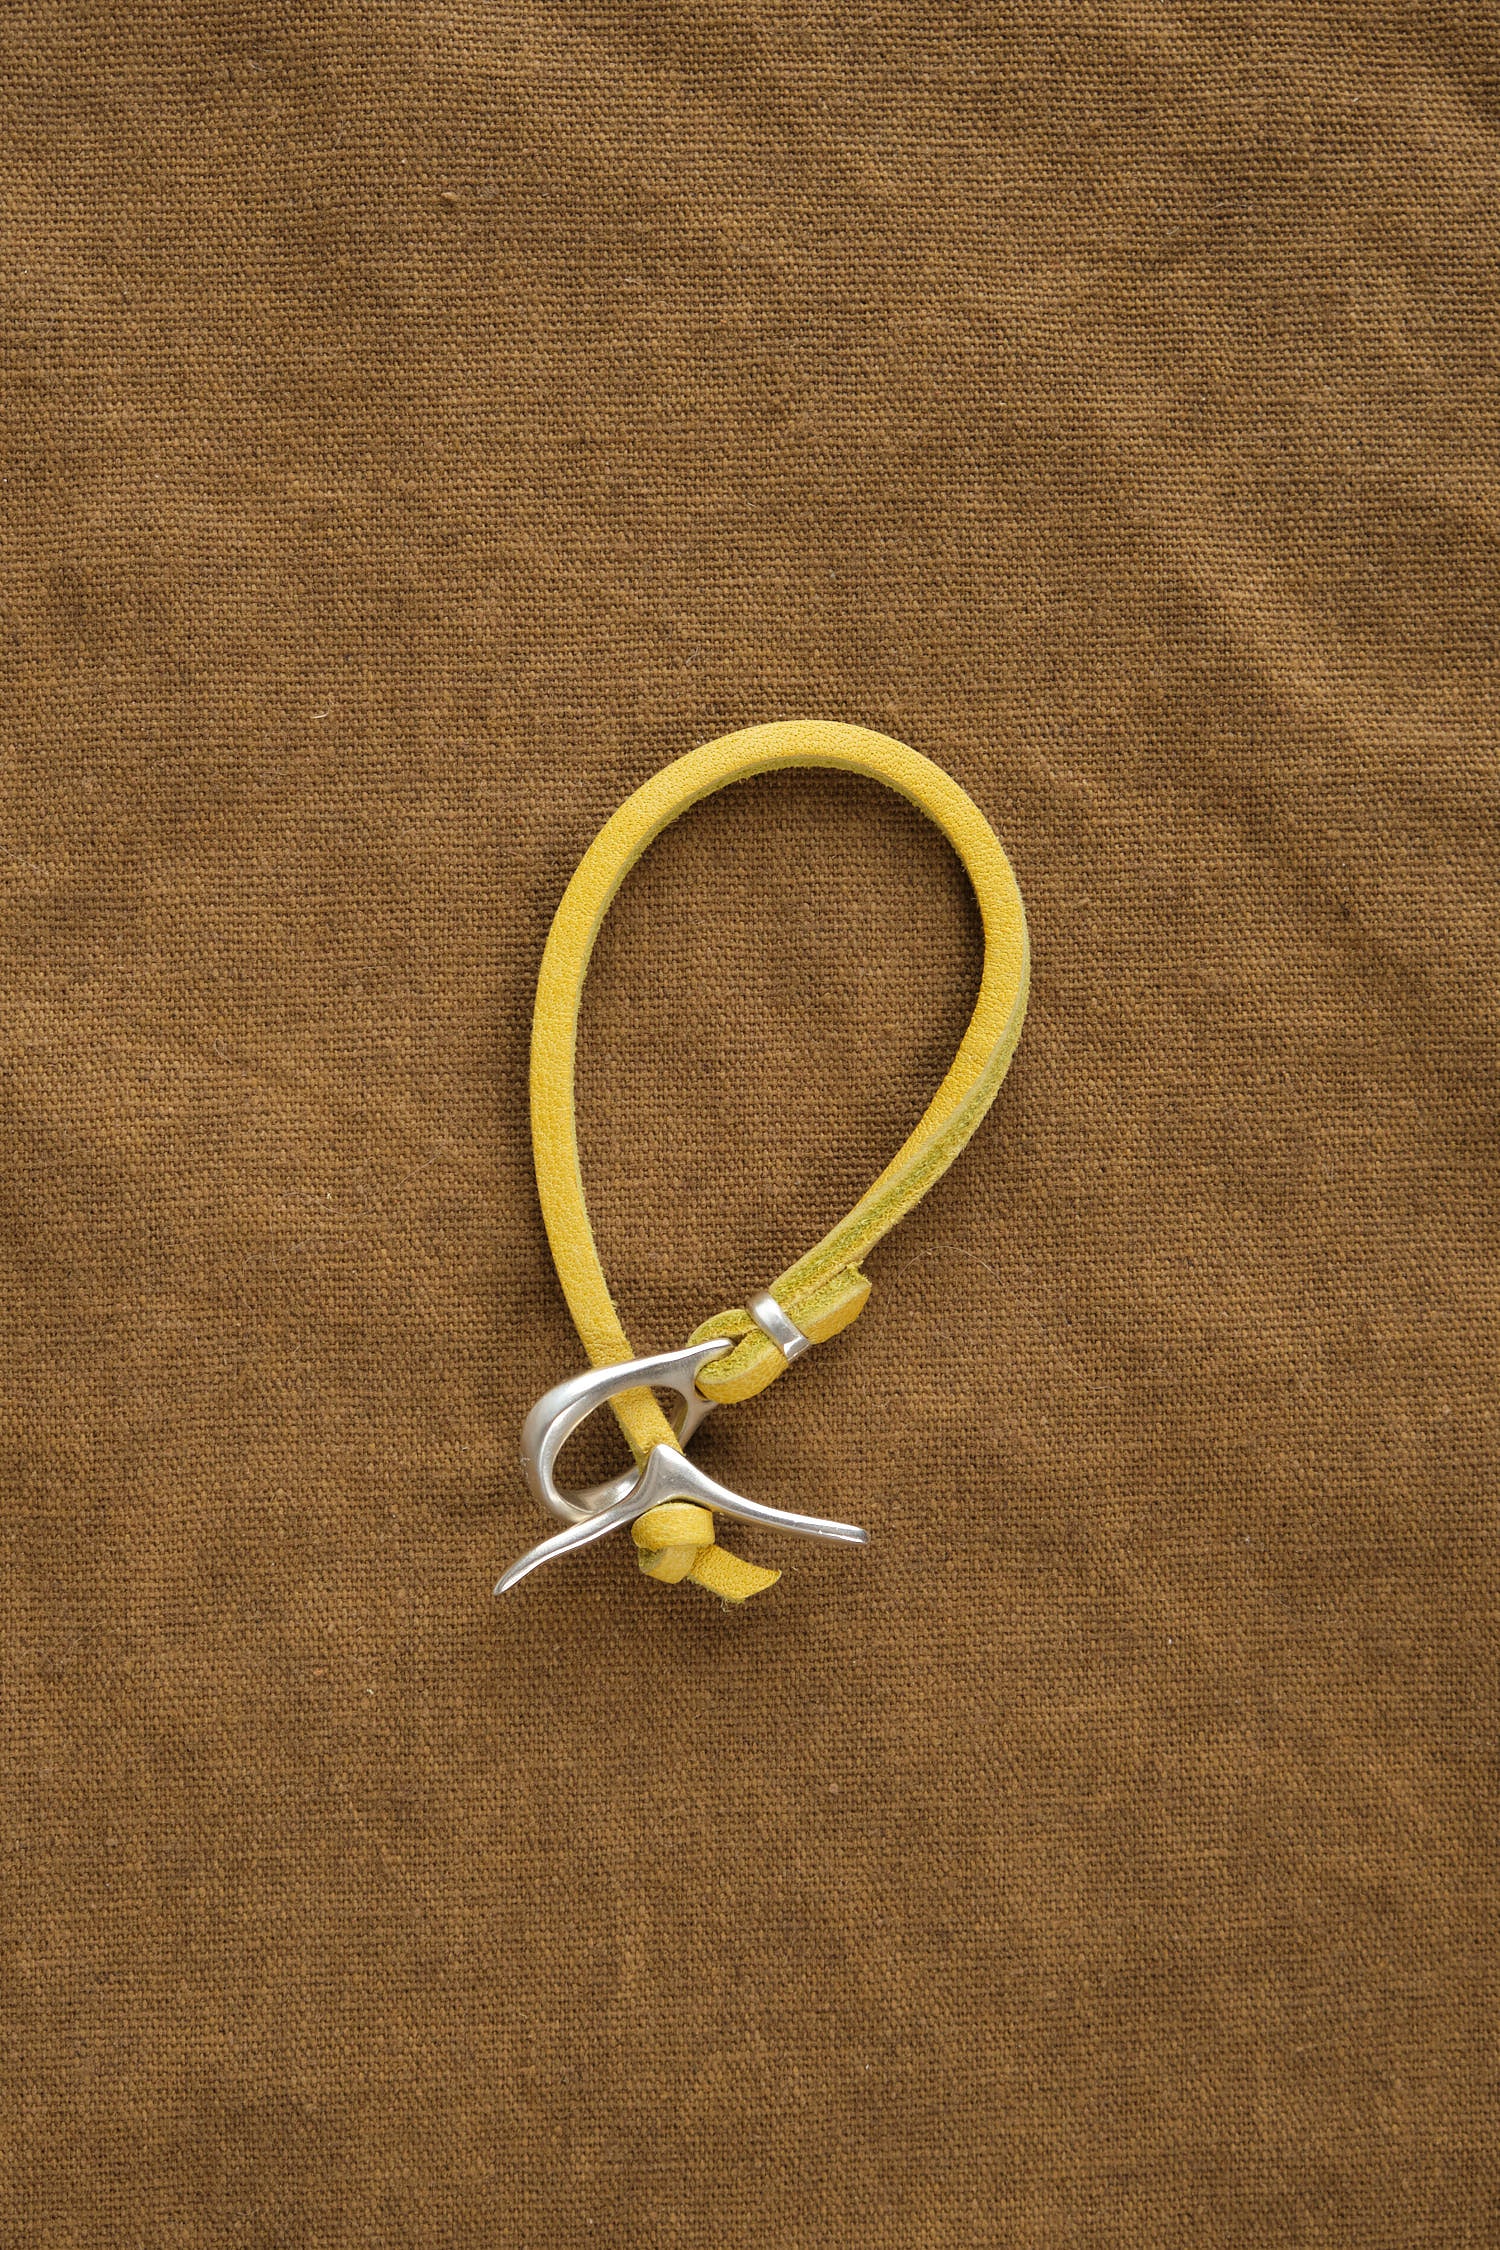 JP Clasp Rawhide Bracelet in Yellow closed